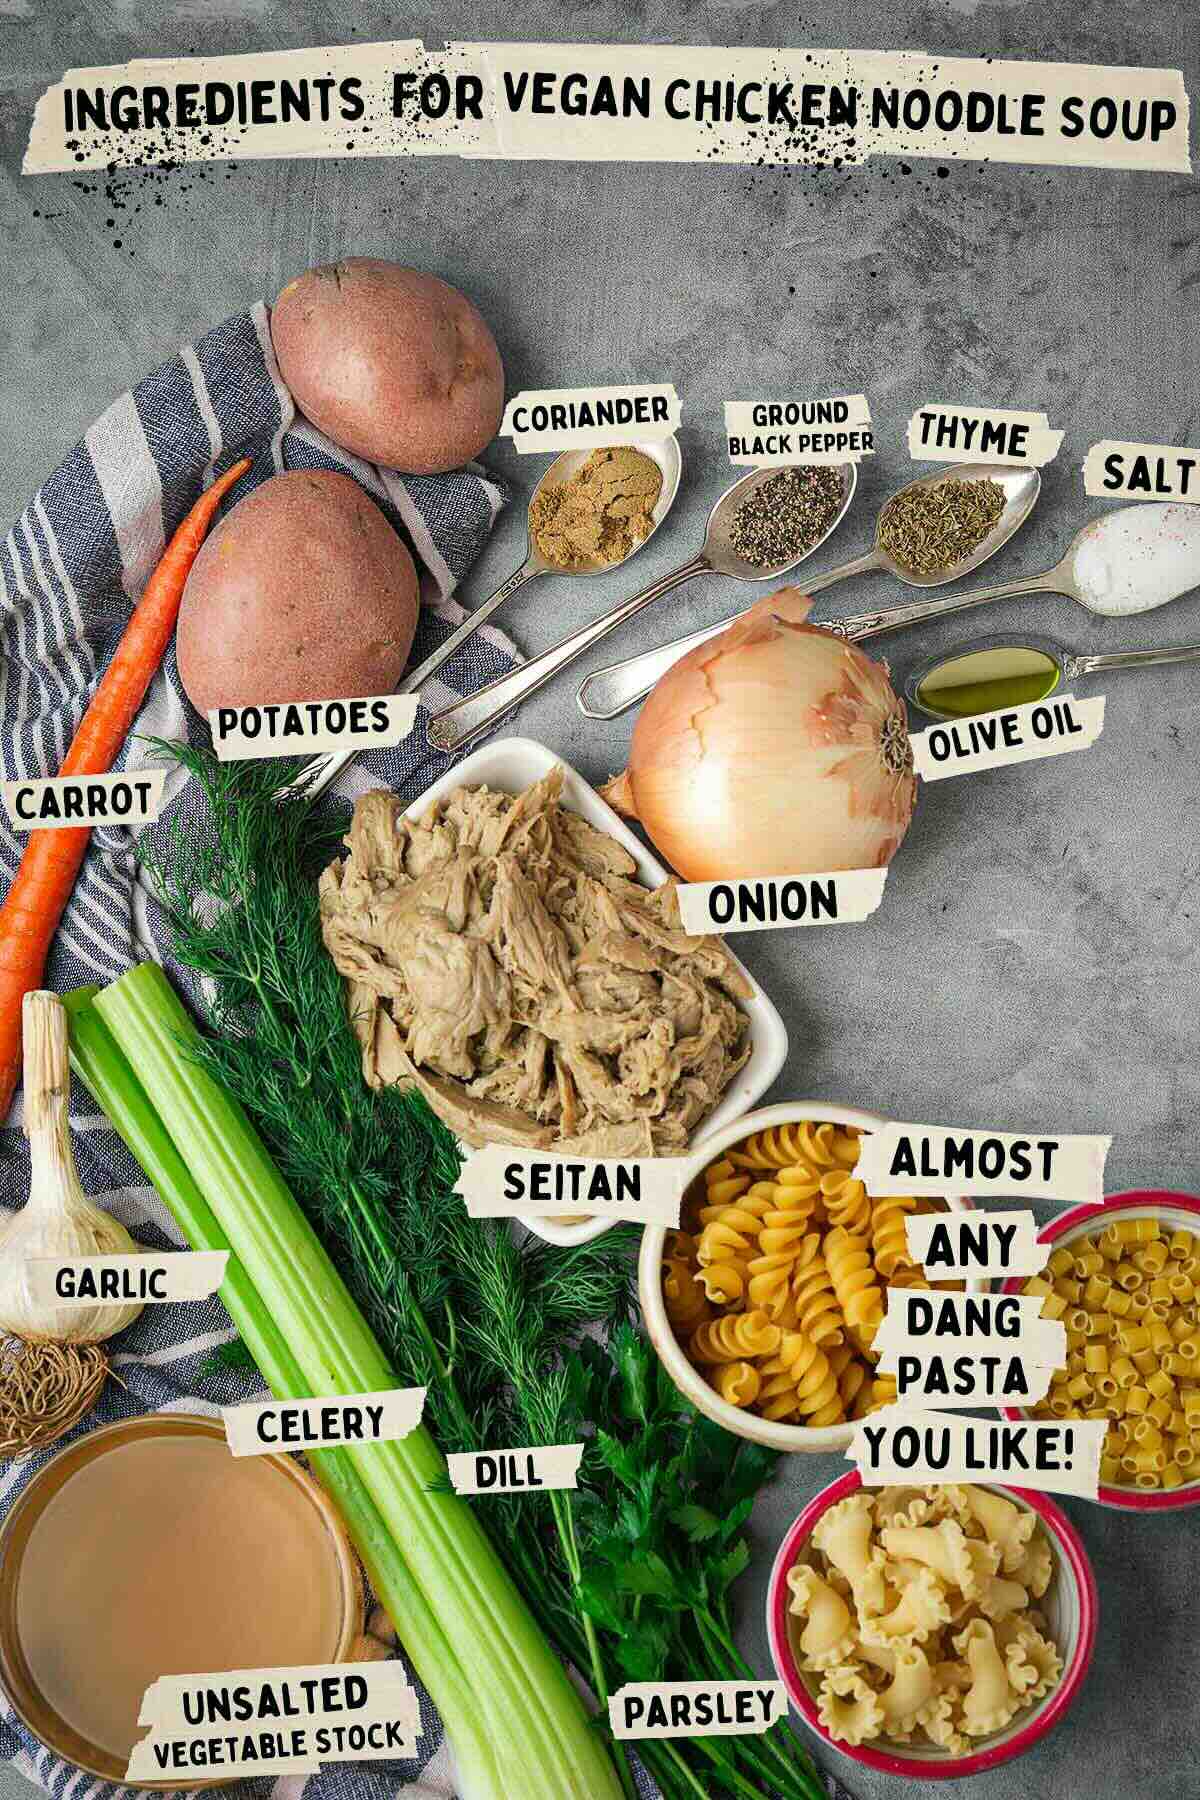 Ingredients for vegan chicken noodle soup.